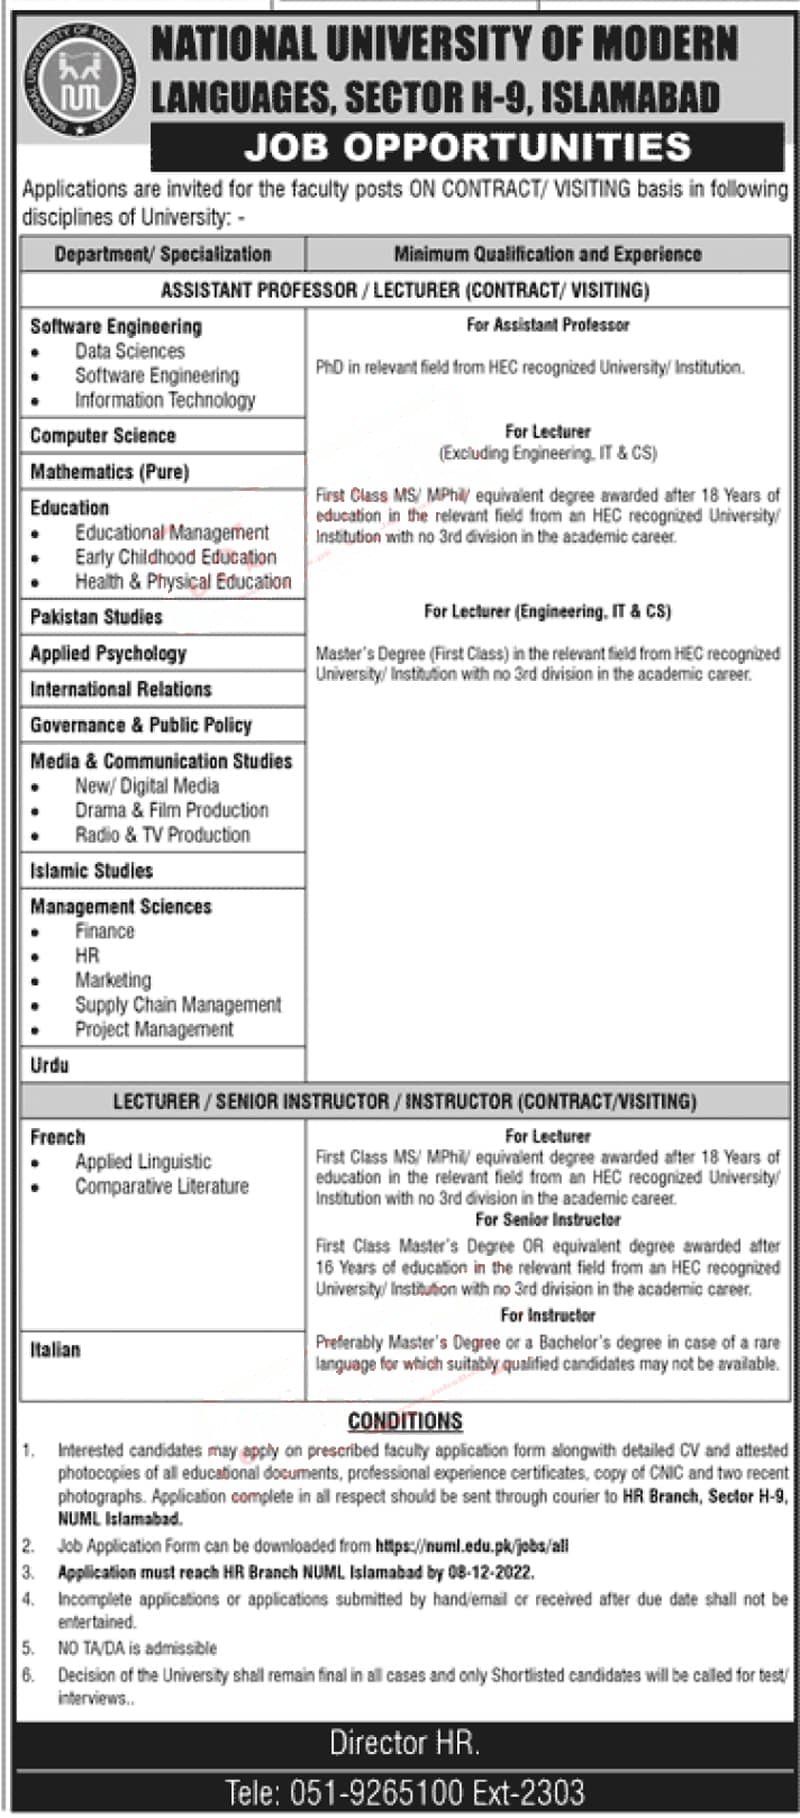 NUML Islamabad Jobs 2022 | Download Application Form at www.numl.edu.pk